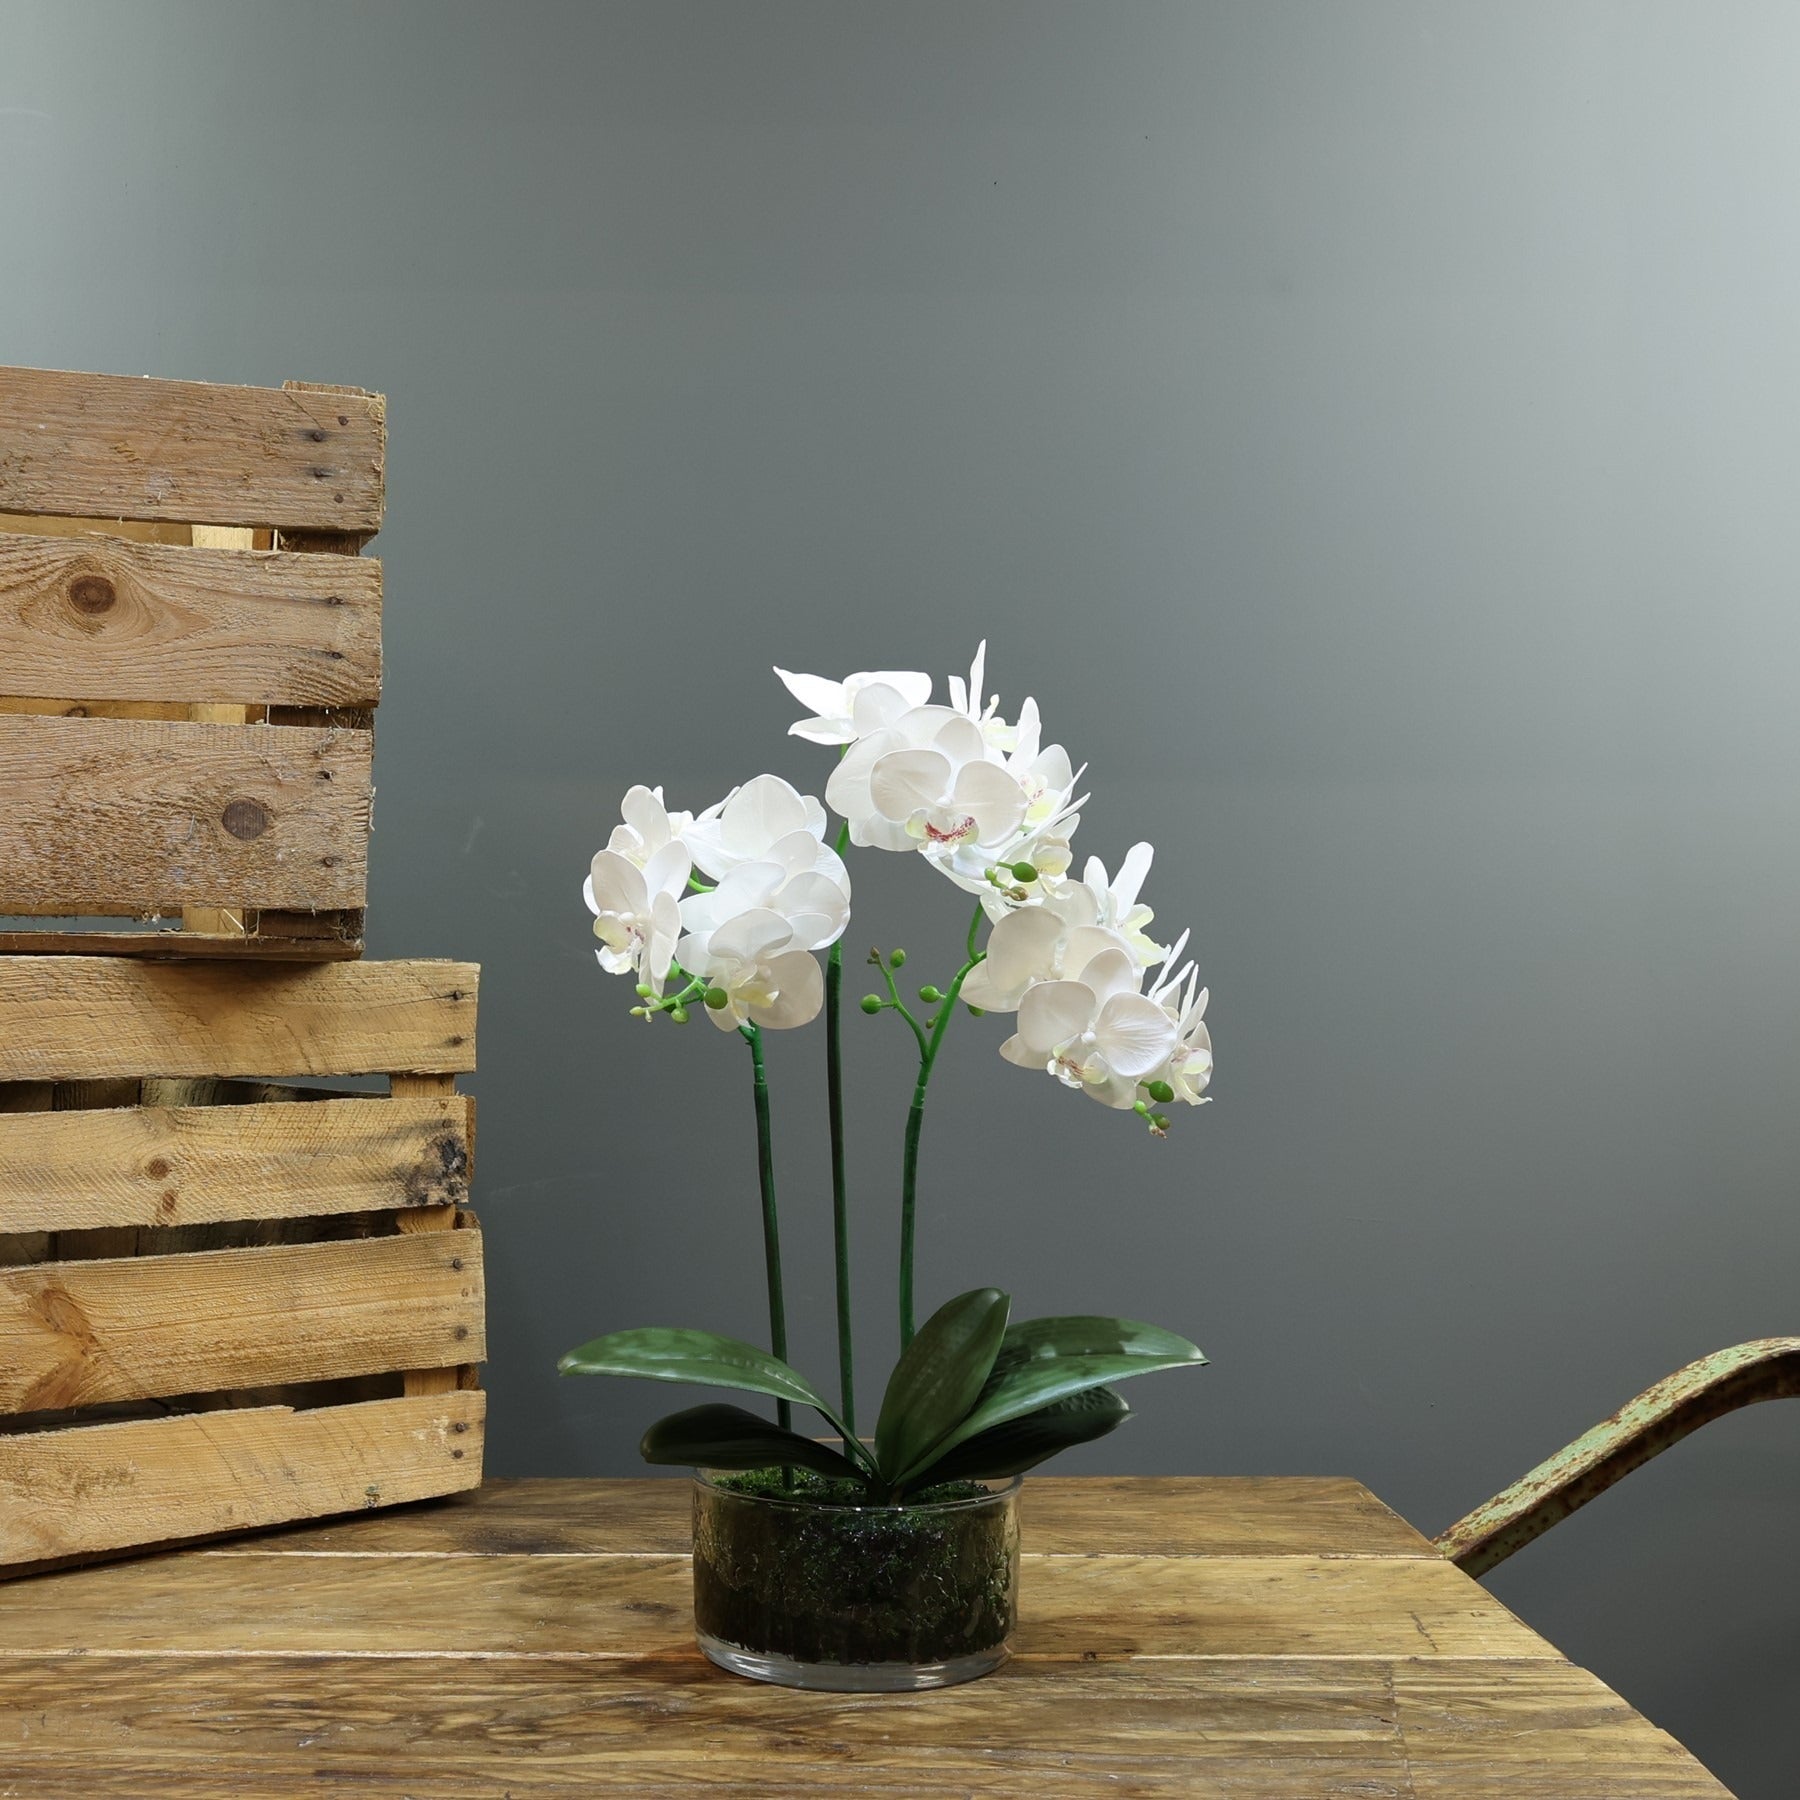 View Artificial White Aragon Phalaenopsis in Glass Planter Medium 3 Stems information